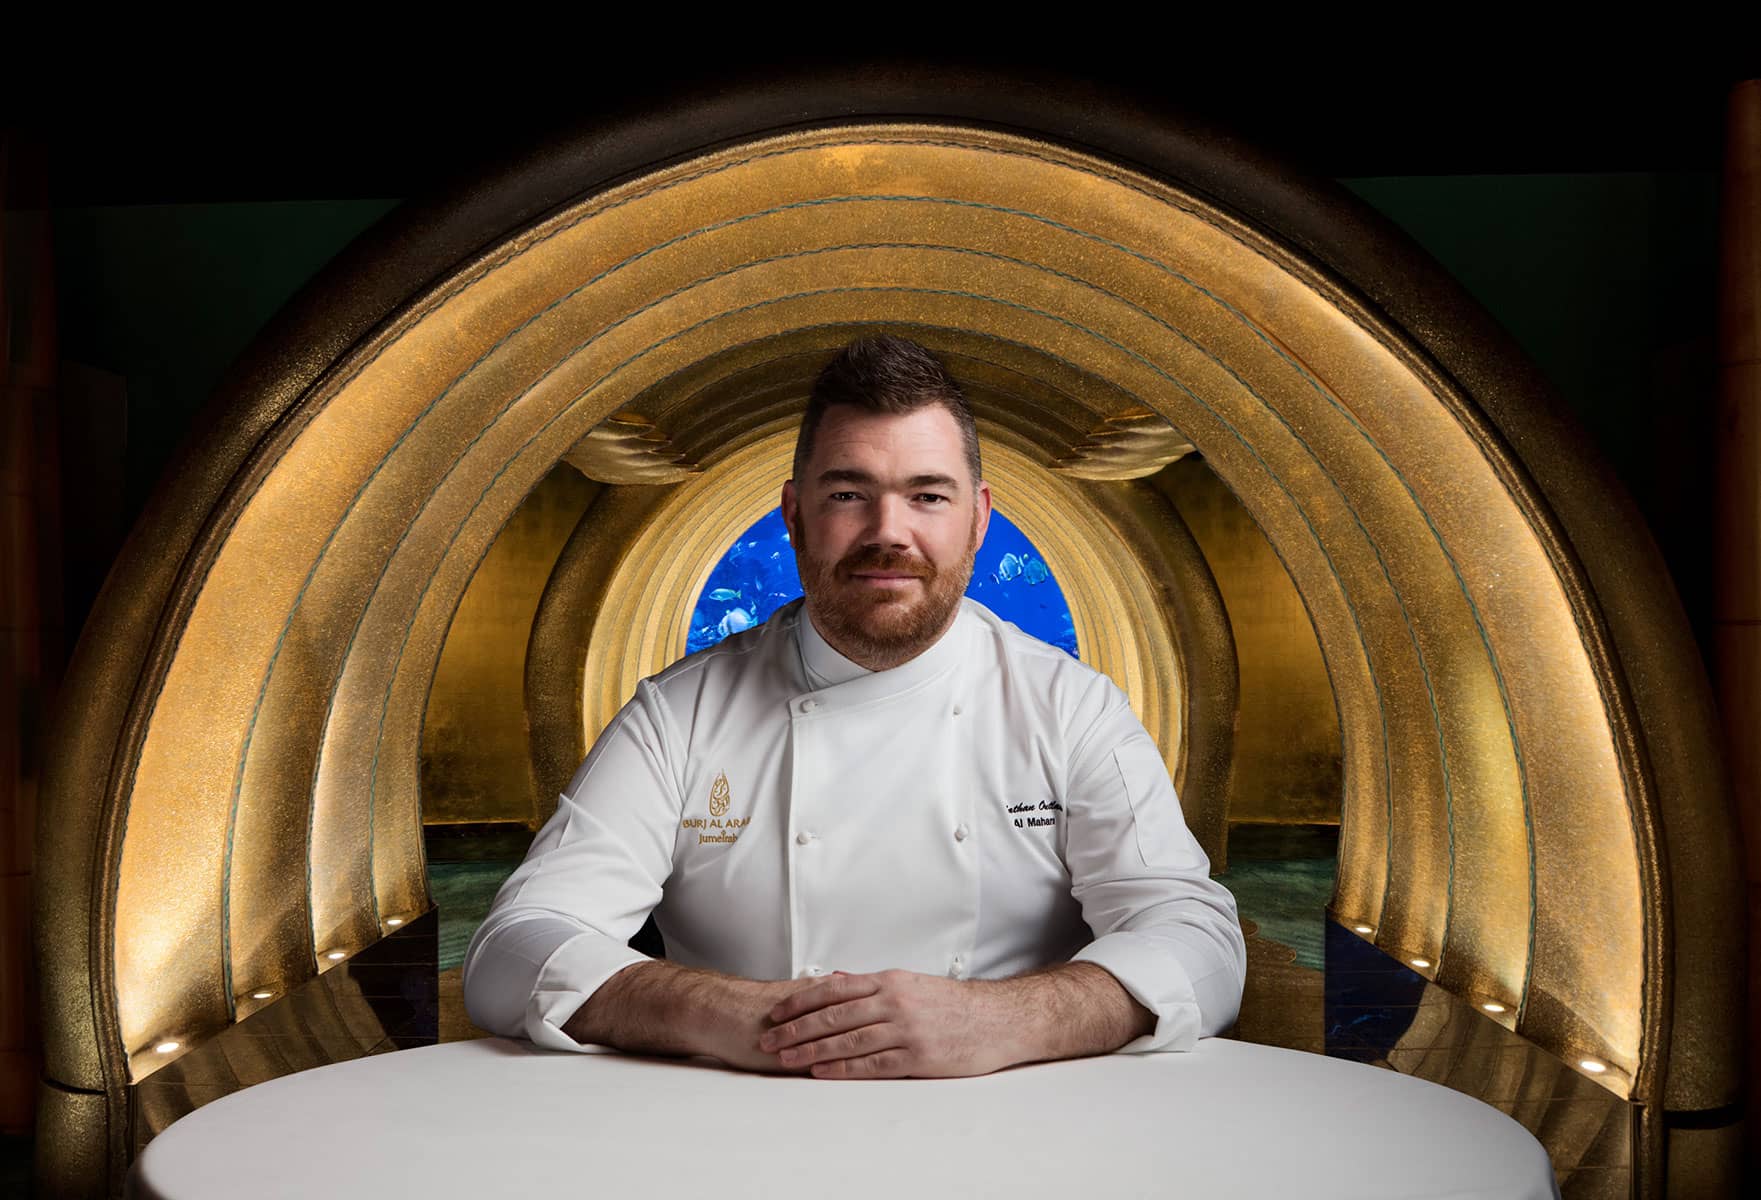 Lifestyle Photographer Dubai: Portrait of Celebrity Chef at Burj Al Arab